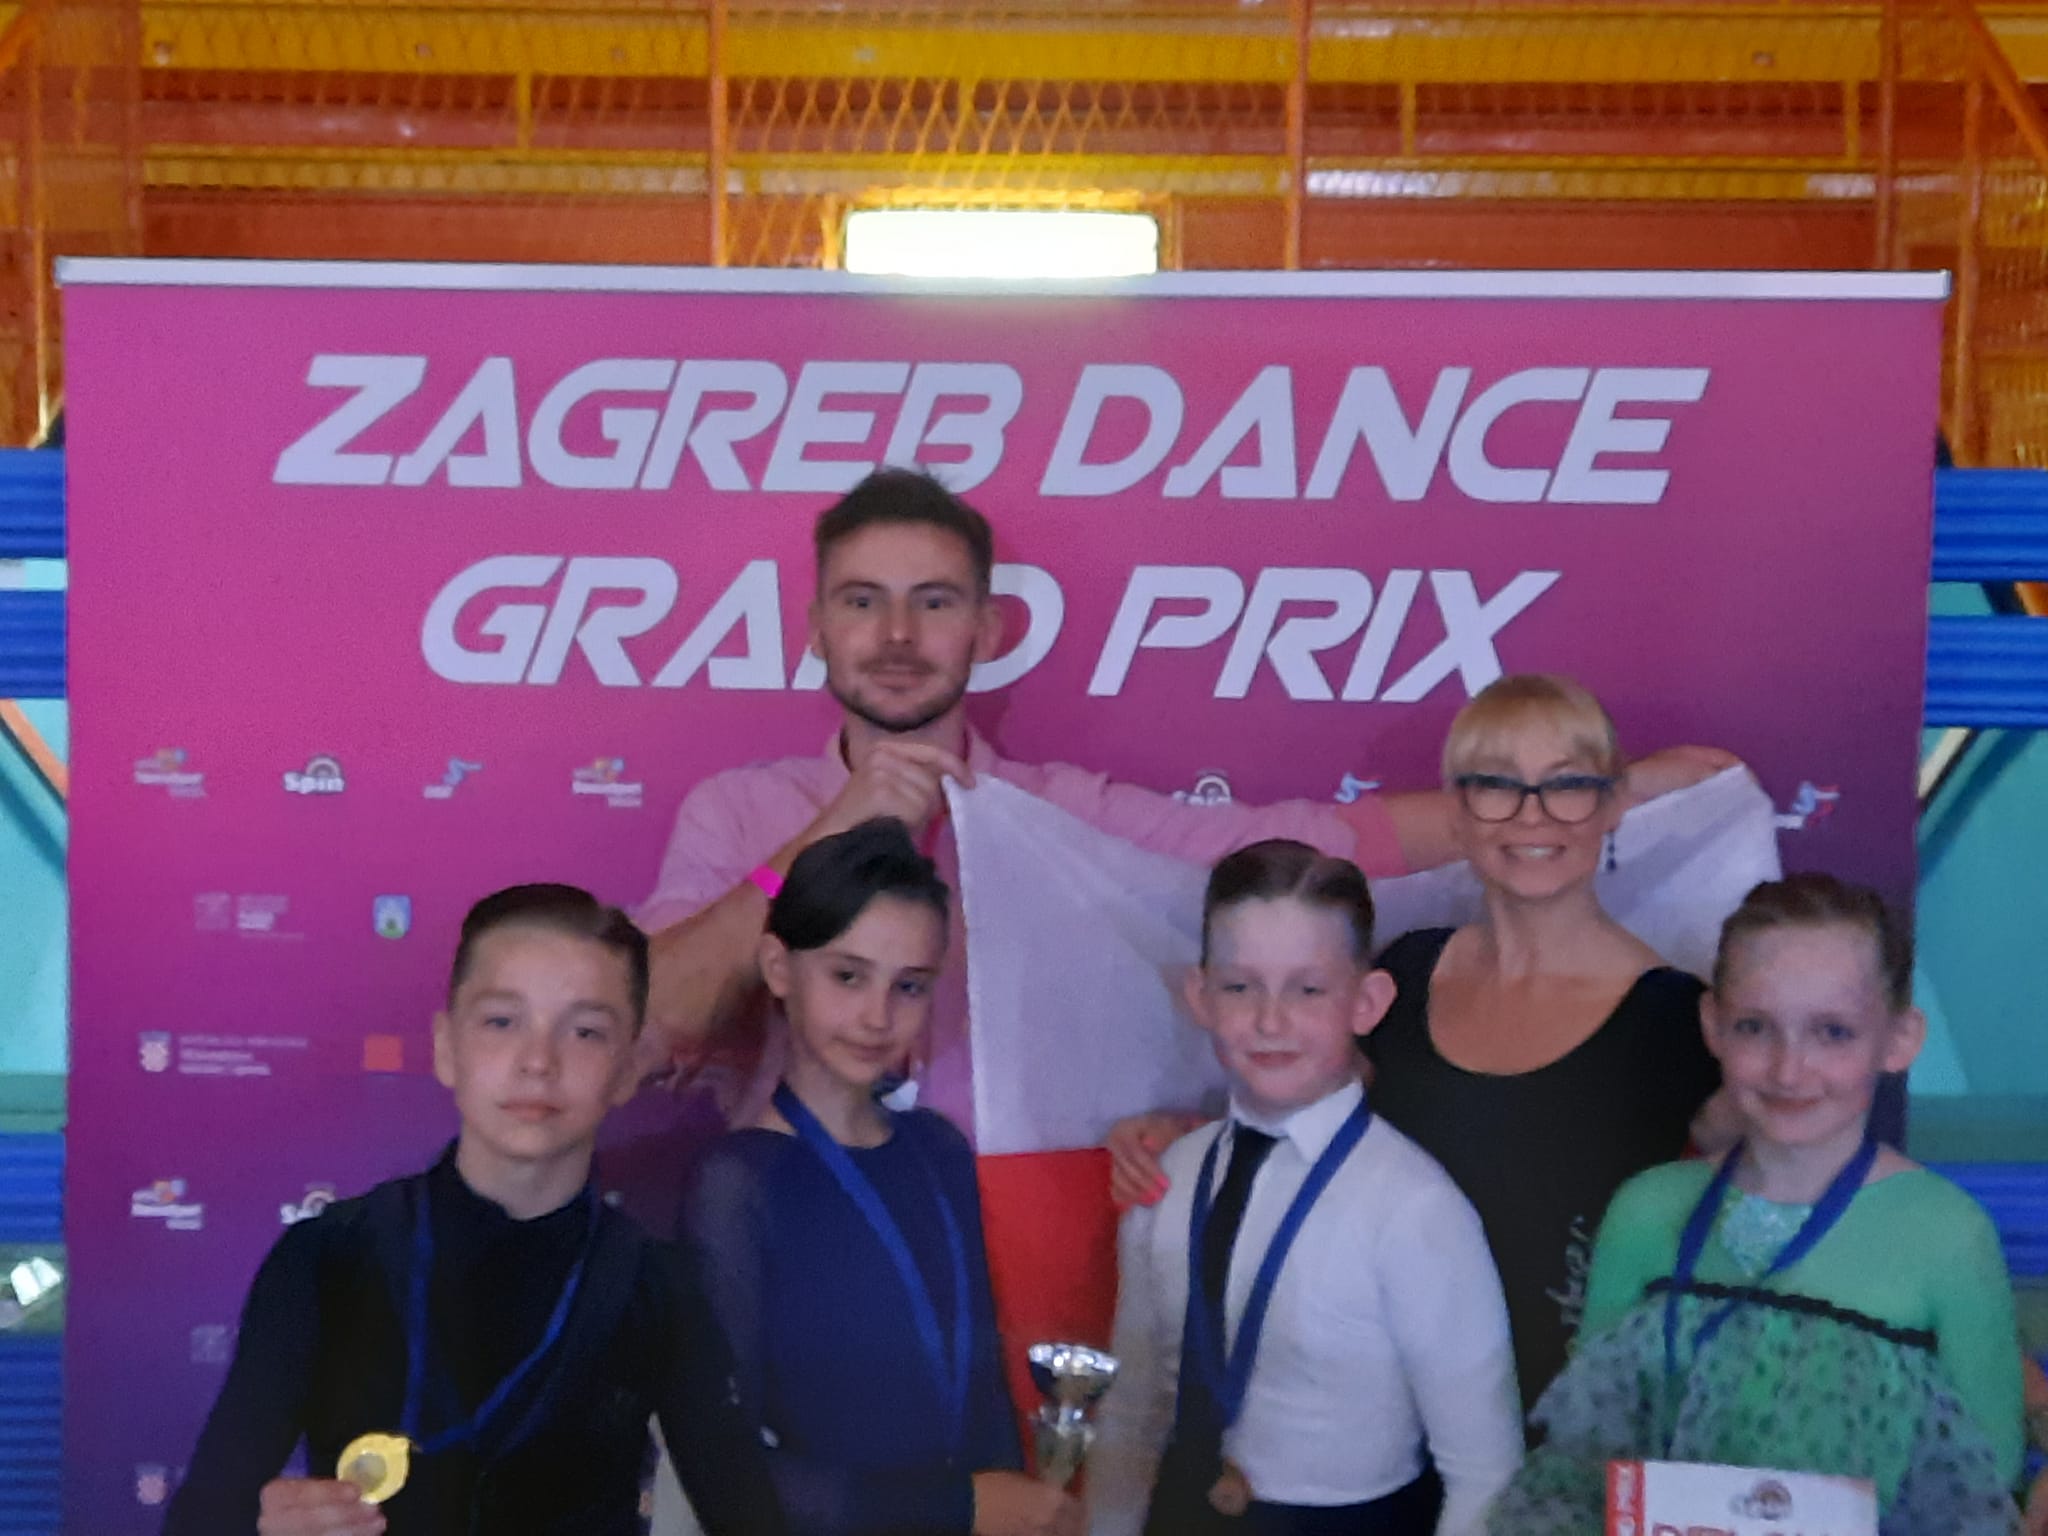 Zagrzeb dance grand prix  🏆